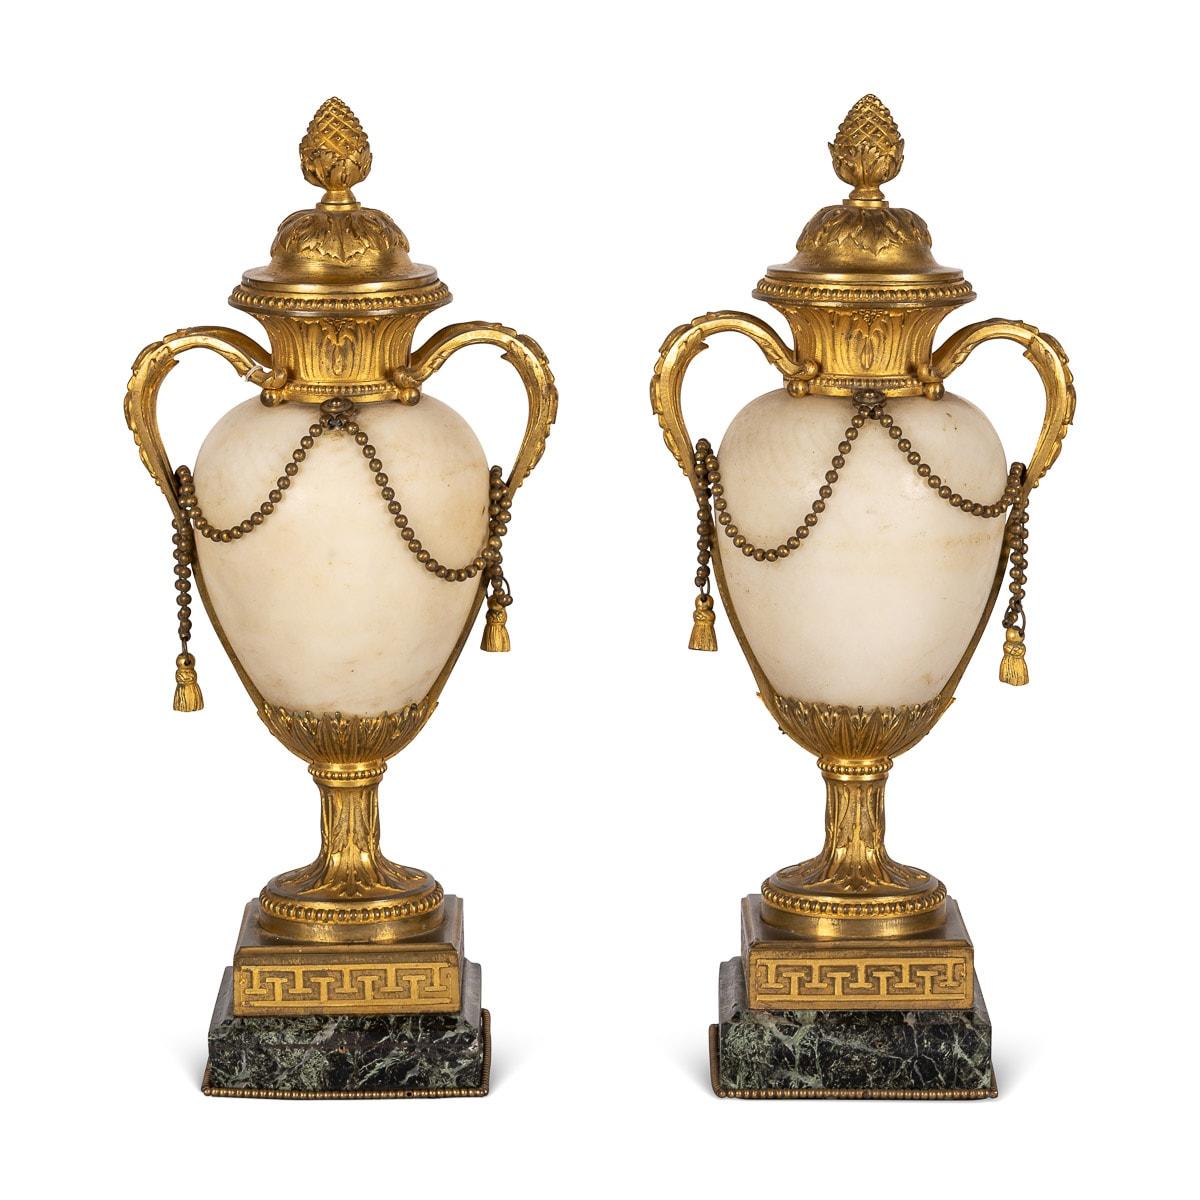 19th Century French Napoleon III Ormolu & White Marble Urns, circa 1850 For Sale 1